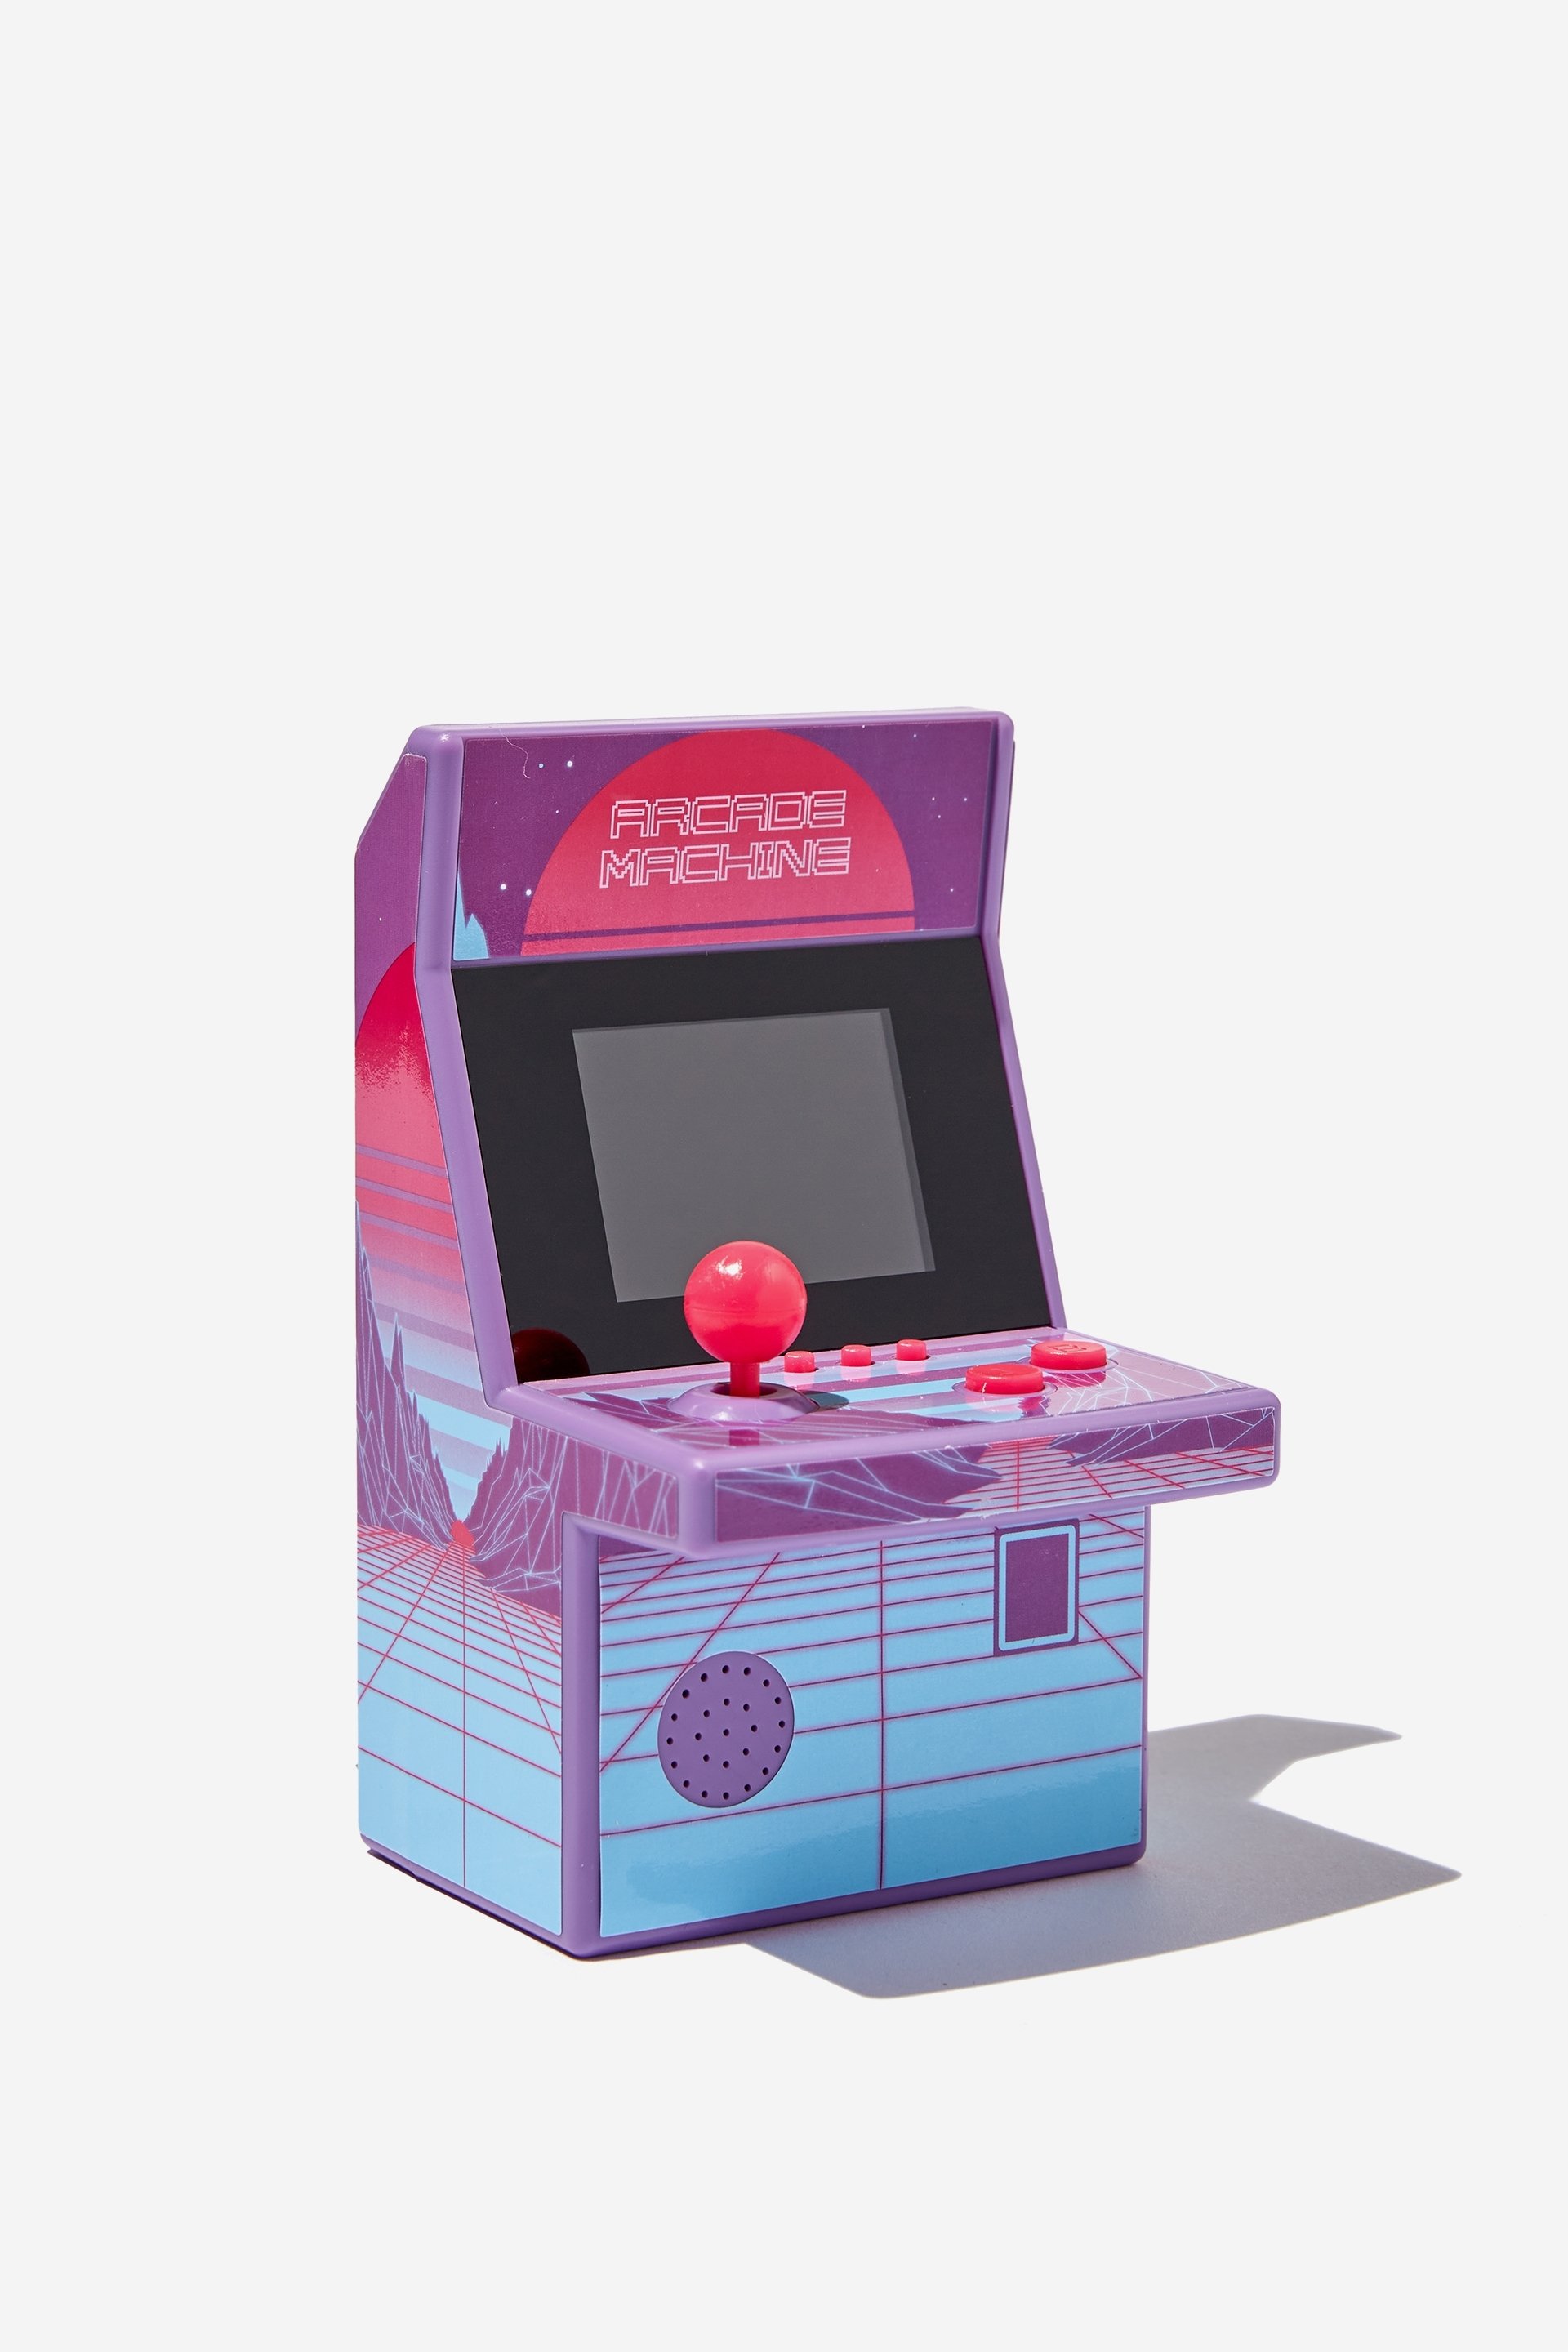 Typo - Arcade Gamer - Post it purple